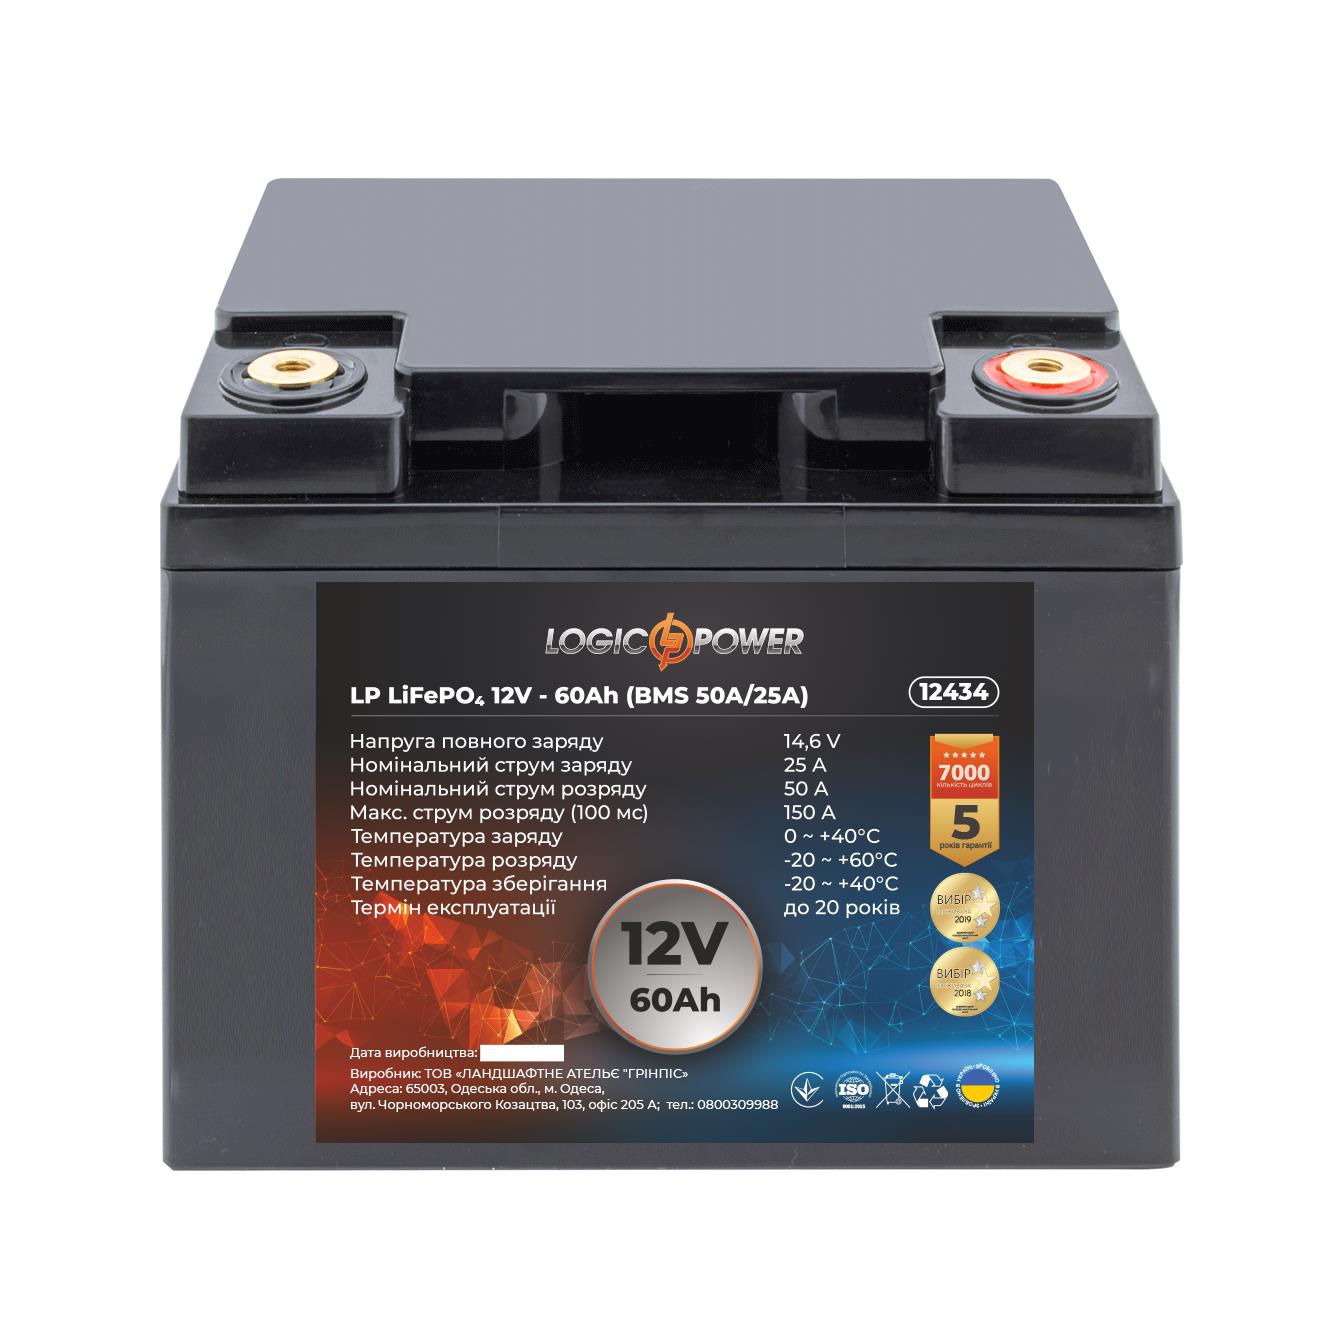 Акумулятор літій-залізо-фосфатний LogicPower LP LiFePO4 12V - 60 Ah (BMS 50A/25А) пластик (12434)